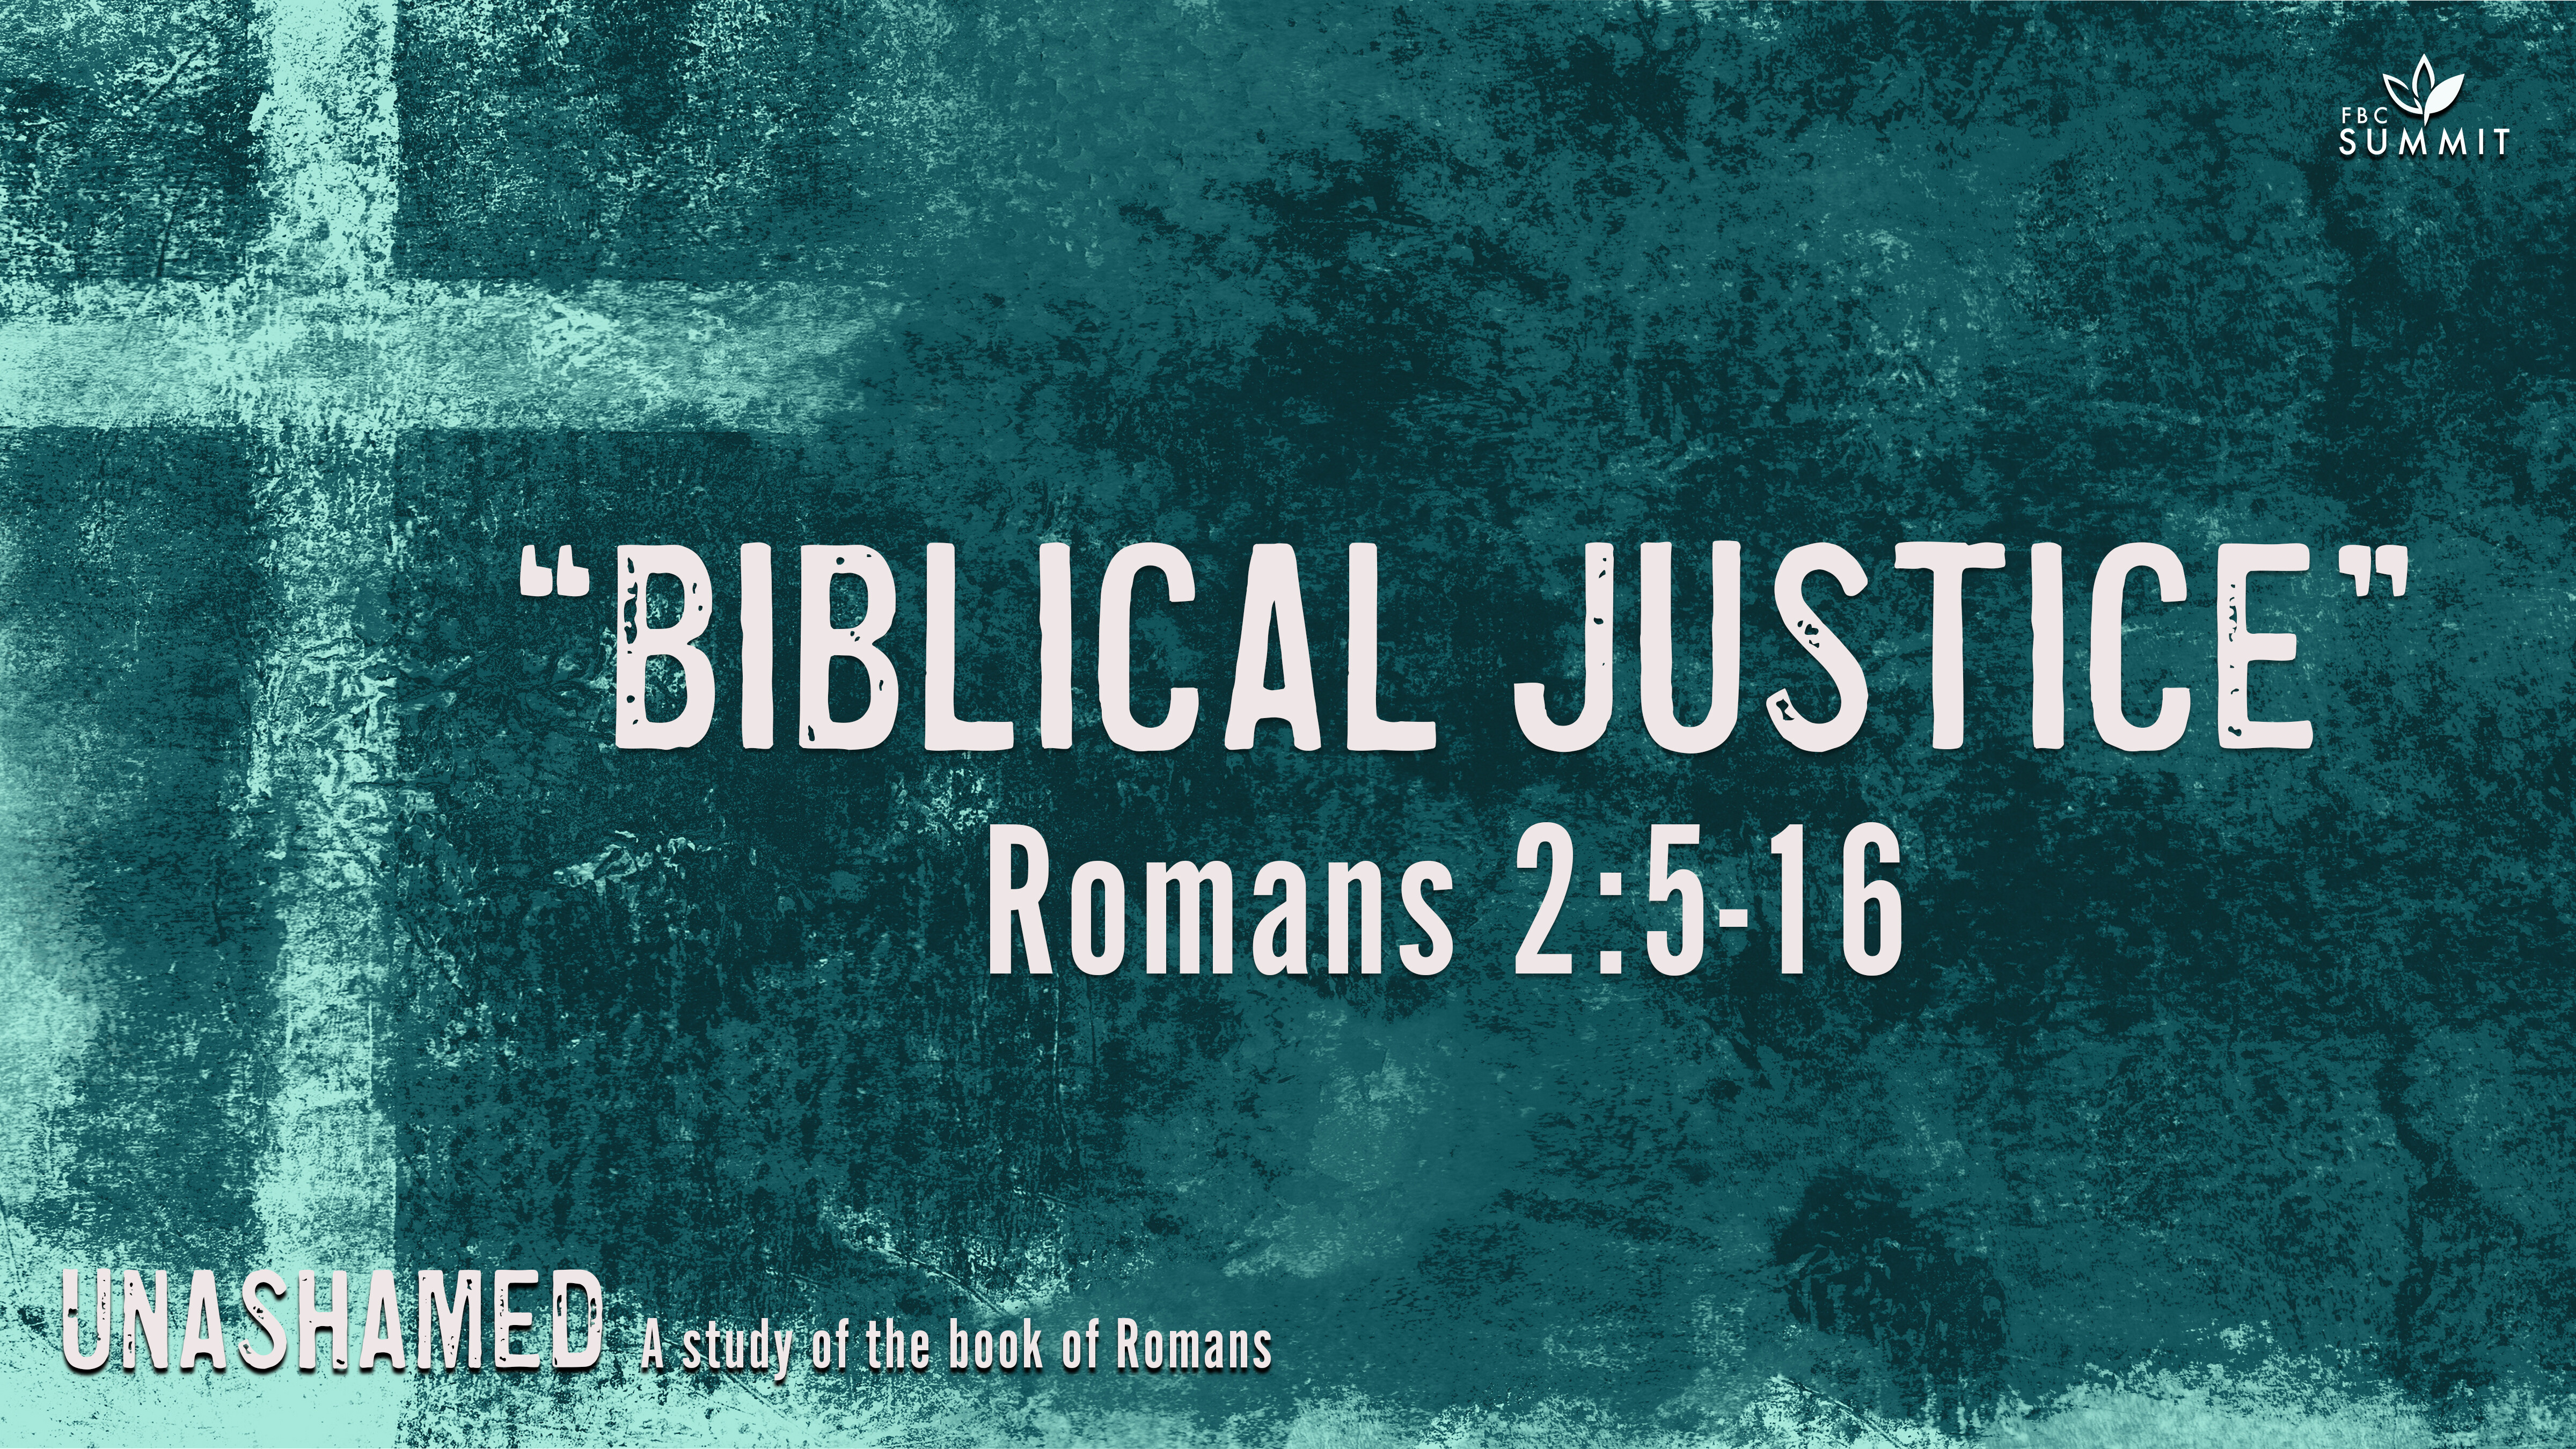 "Biblical Justice" Romans 2:5-16